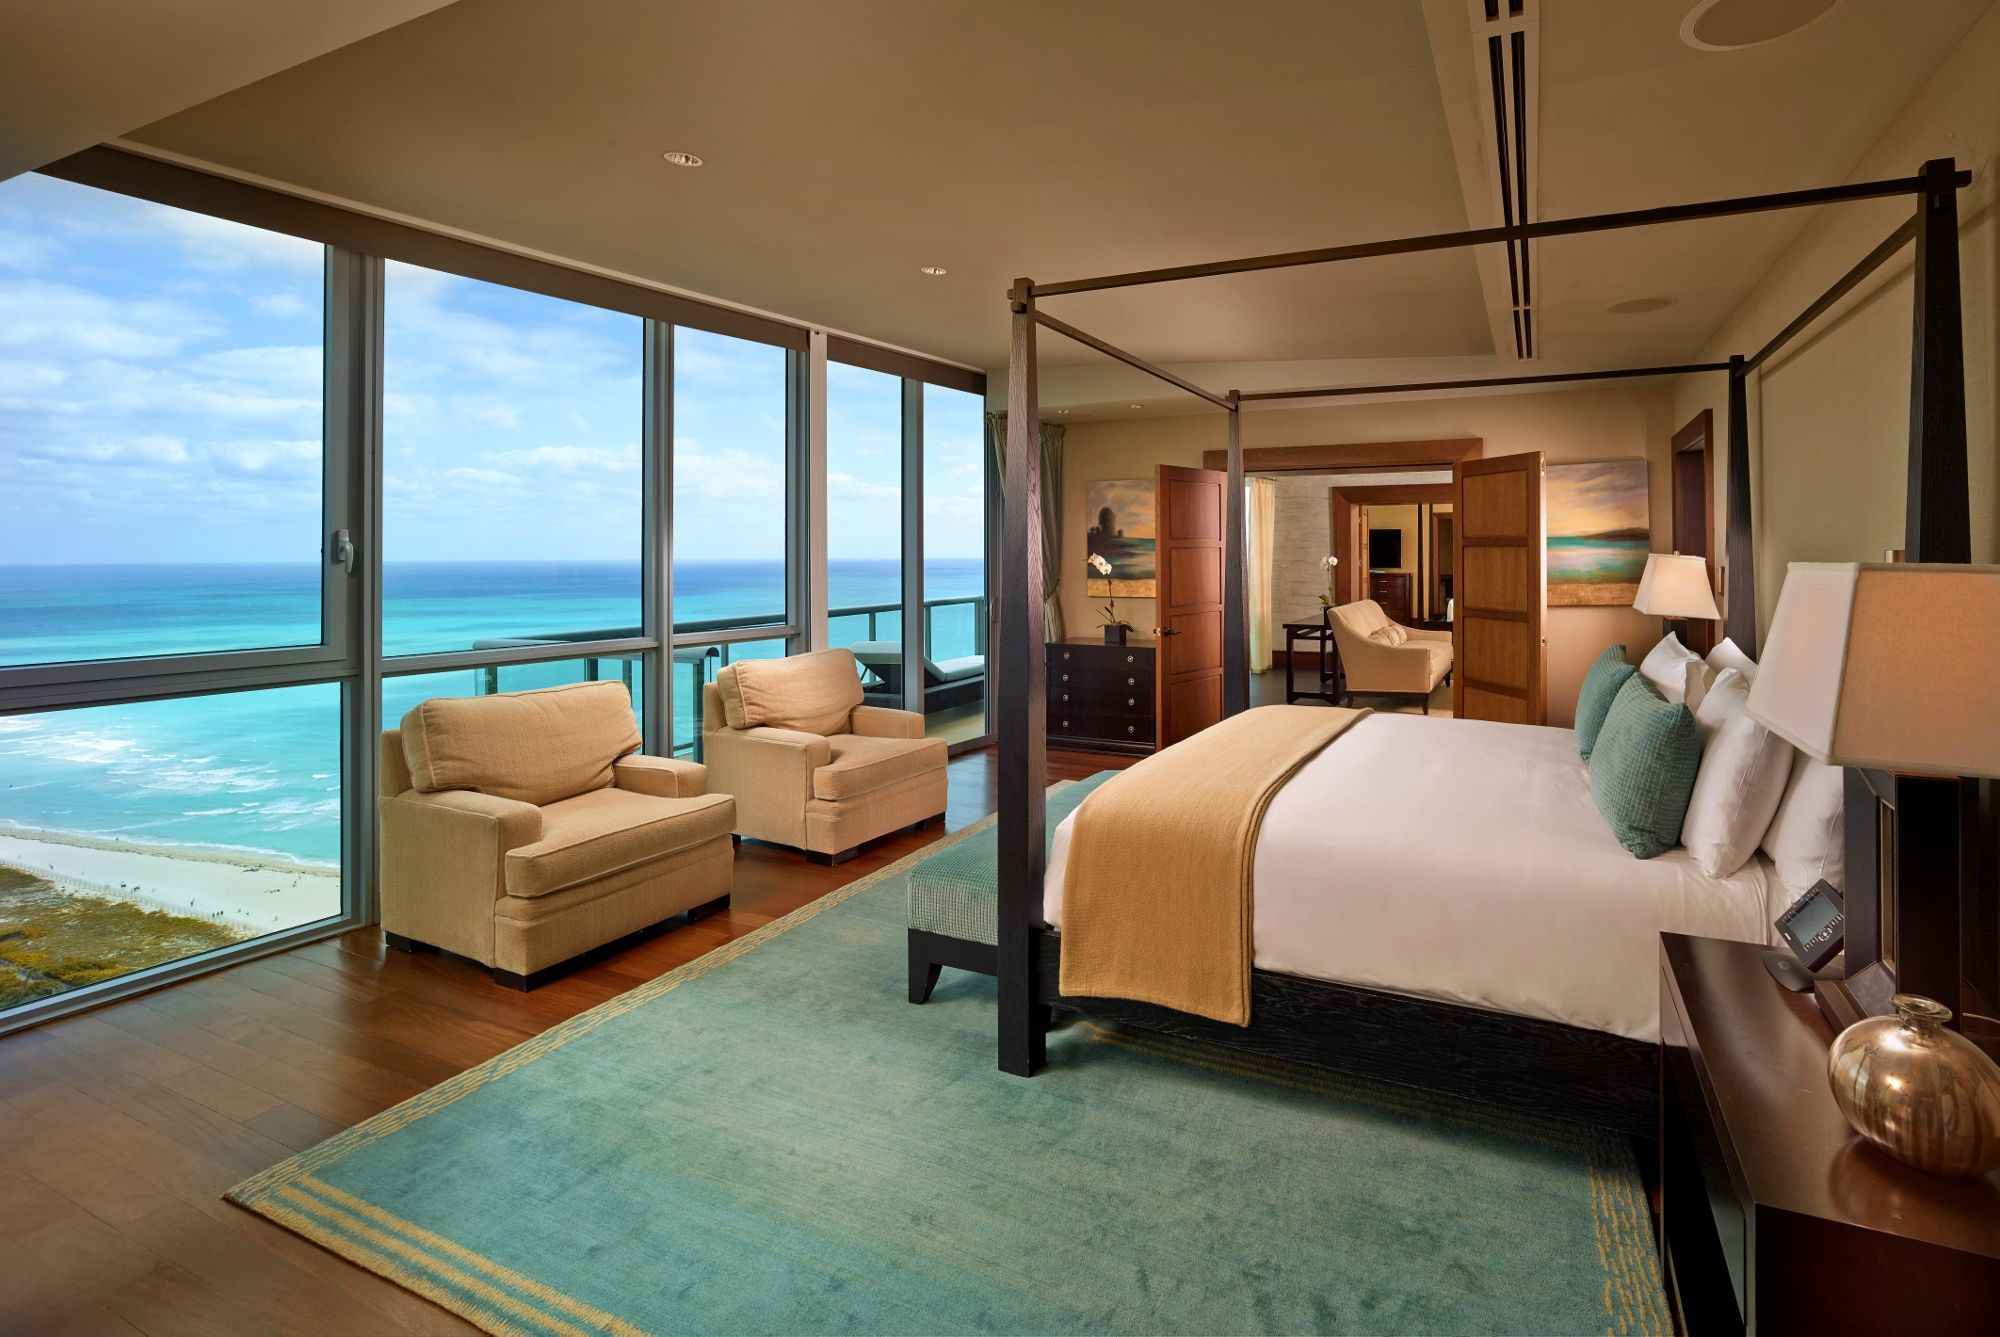 Топ 5 отелей. «The Setai» в Майами. The Setai Miami Beach 5. Спальня с видом на море. Спальня с видом на океан.